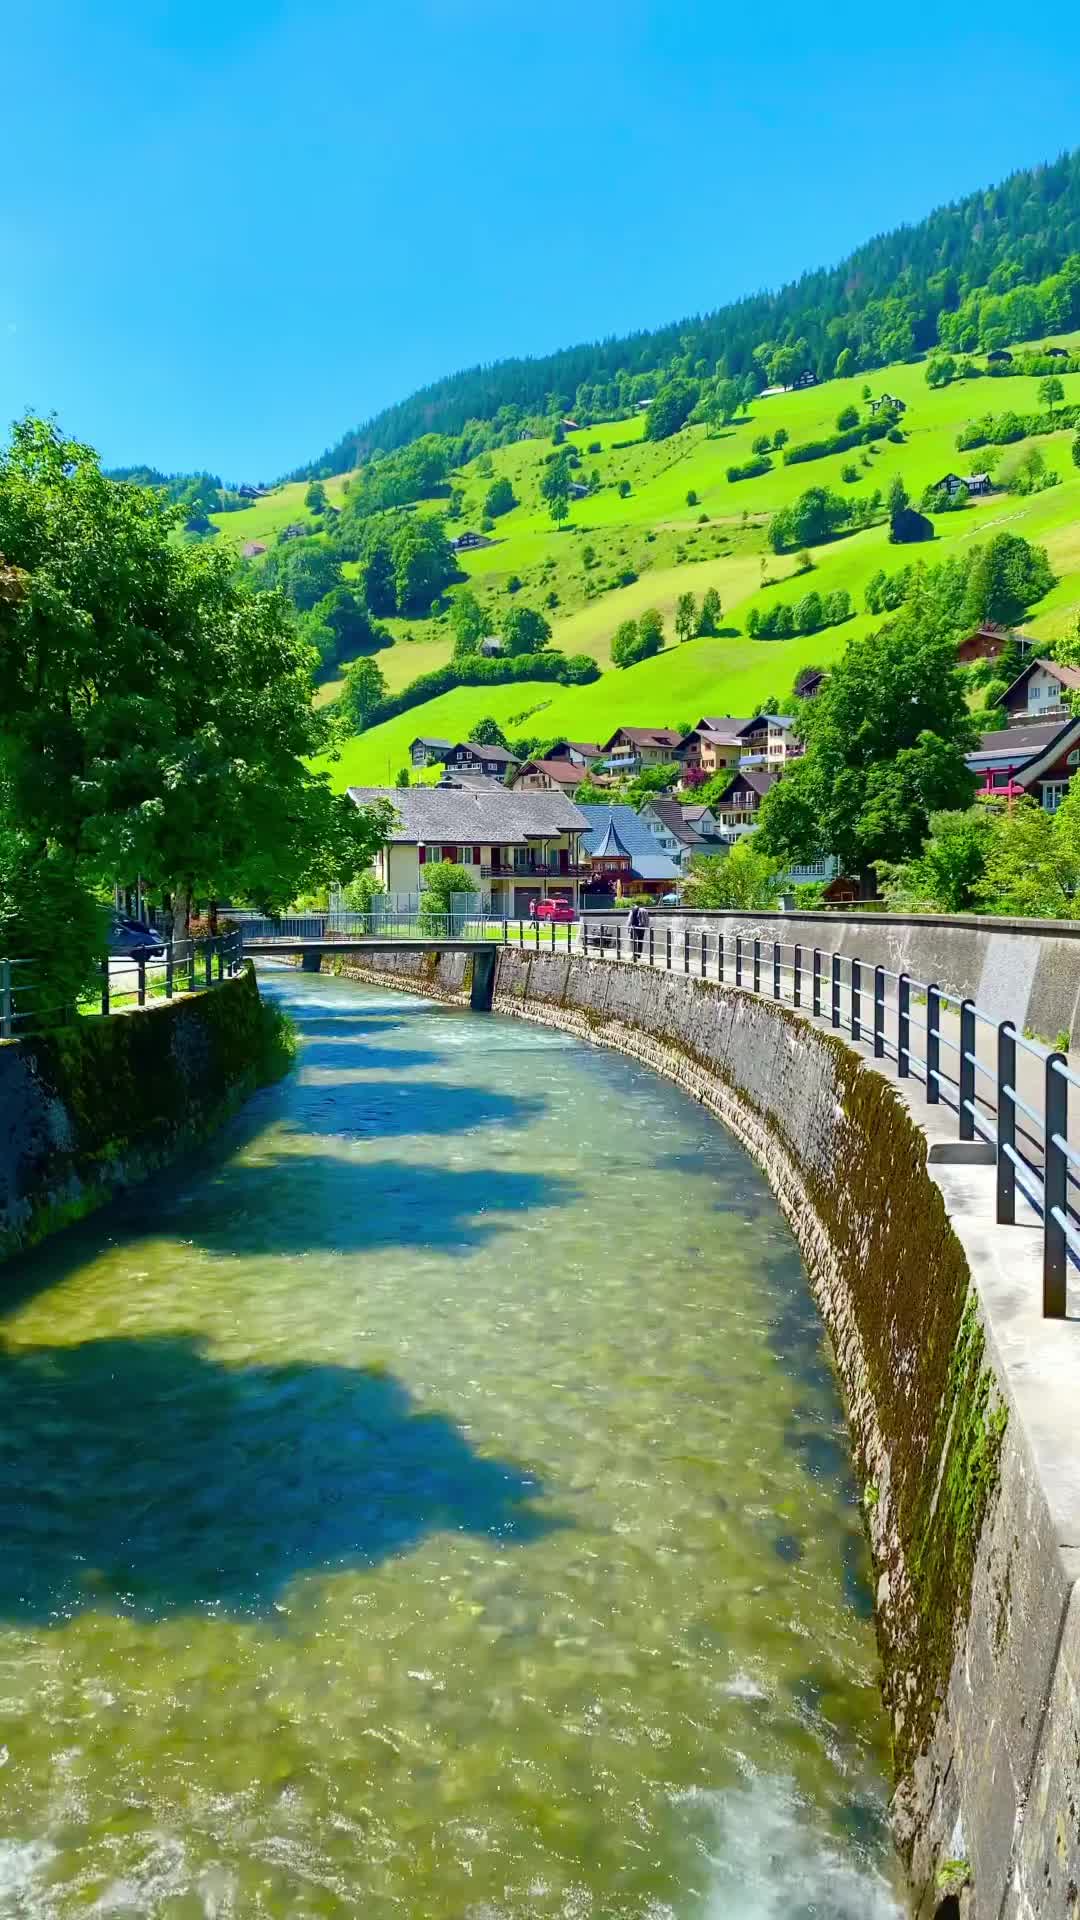 🇬🇧🇮🇩👇🇨🇭KALI SUNGAI ALT ST JOHANN, TOGGENBURG🇨🇭 RIVER IN ALT ST JOHANN TOGGENBURG🇨🇭

❤️Follow @syifa_in_switzerland for more swiss inspirations 

 📌Save this for your trip to Switzerland 🇨🇭

#nature #toggenburg #river #sungai #switzerlandwonderland #swiss #suíça #suisse #schweiz #toggenburg #wonderlust #switzerlandcolors #bestofswitzerland #interlaken #ineedswitzerland #inlovewithswitzerland #bestofswitzerland #beautifuldestinations #beautifulswitzerland #swissblogger #İsviçre #countryside #switzerlandcolors #switzerland  #visitswitzerland  #exploreswitzerland  #switzerlandtravel